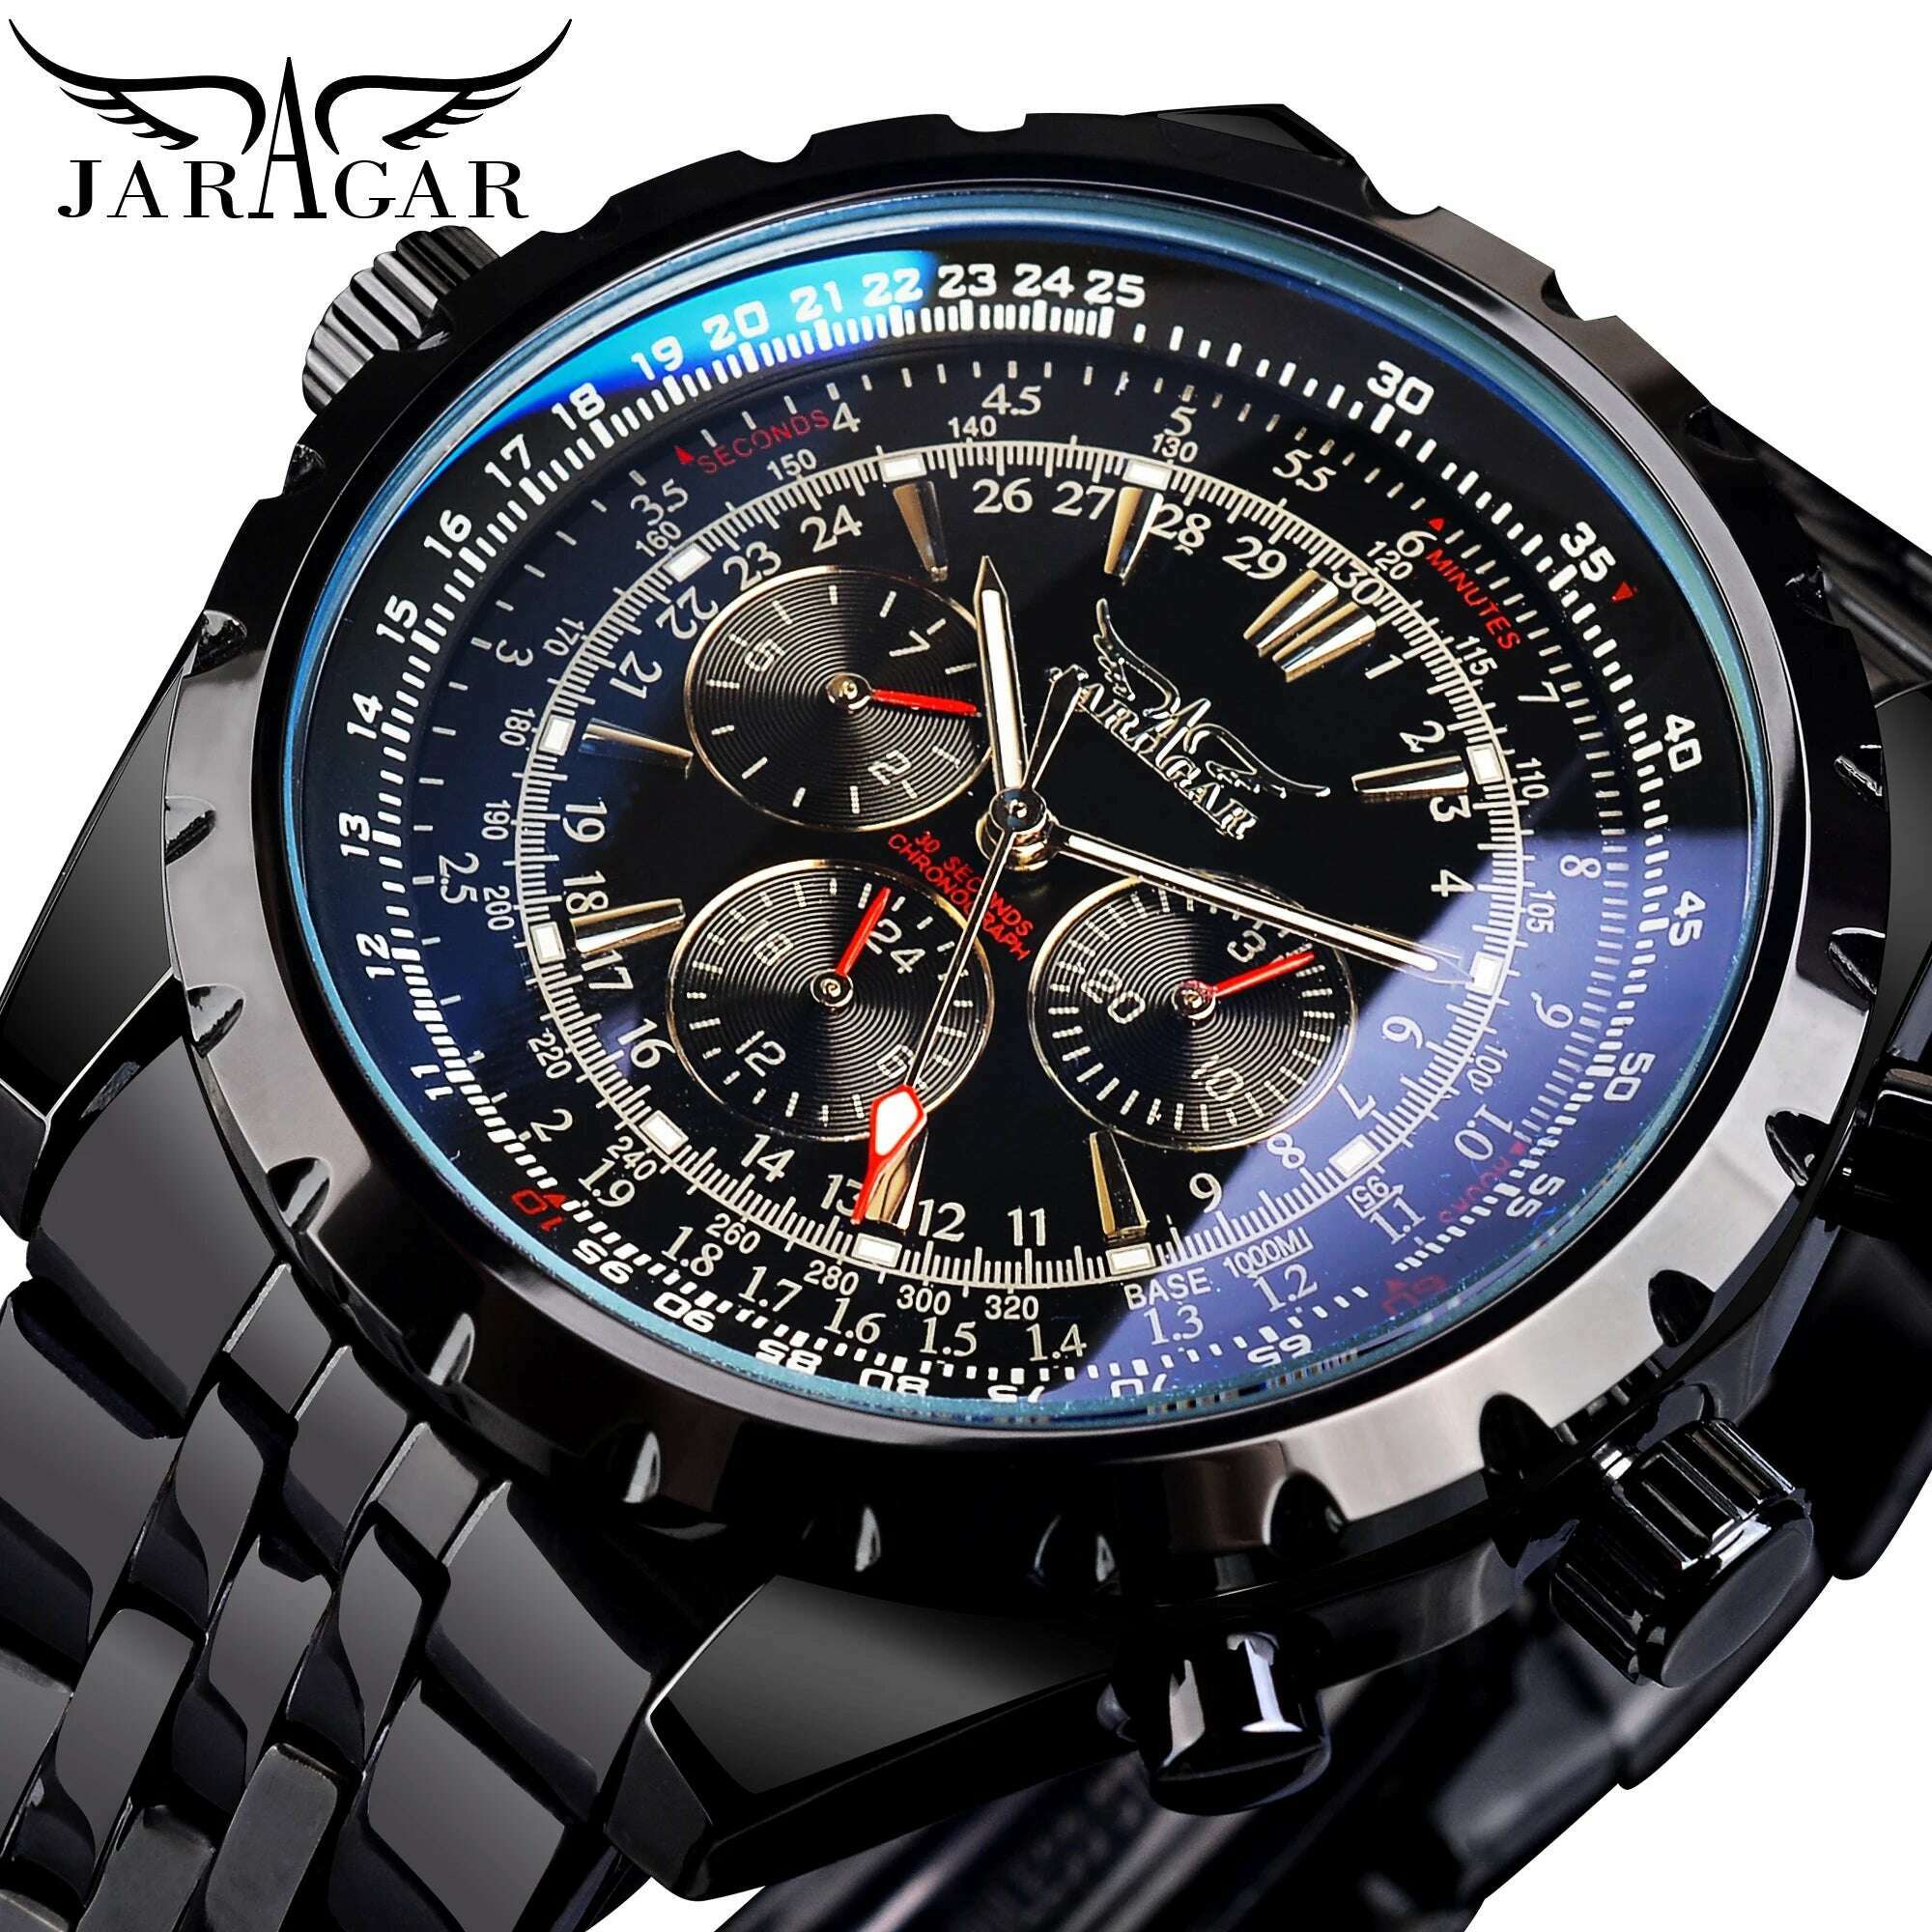 KIMLUD, Jaragar Blue Glass Design Black Silver Automatic Watch Stainless Steel Date Clock Luminous Men Business Mechanical Wristwatch, S1144-9, KIMLUD Women's Clothes